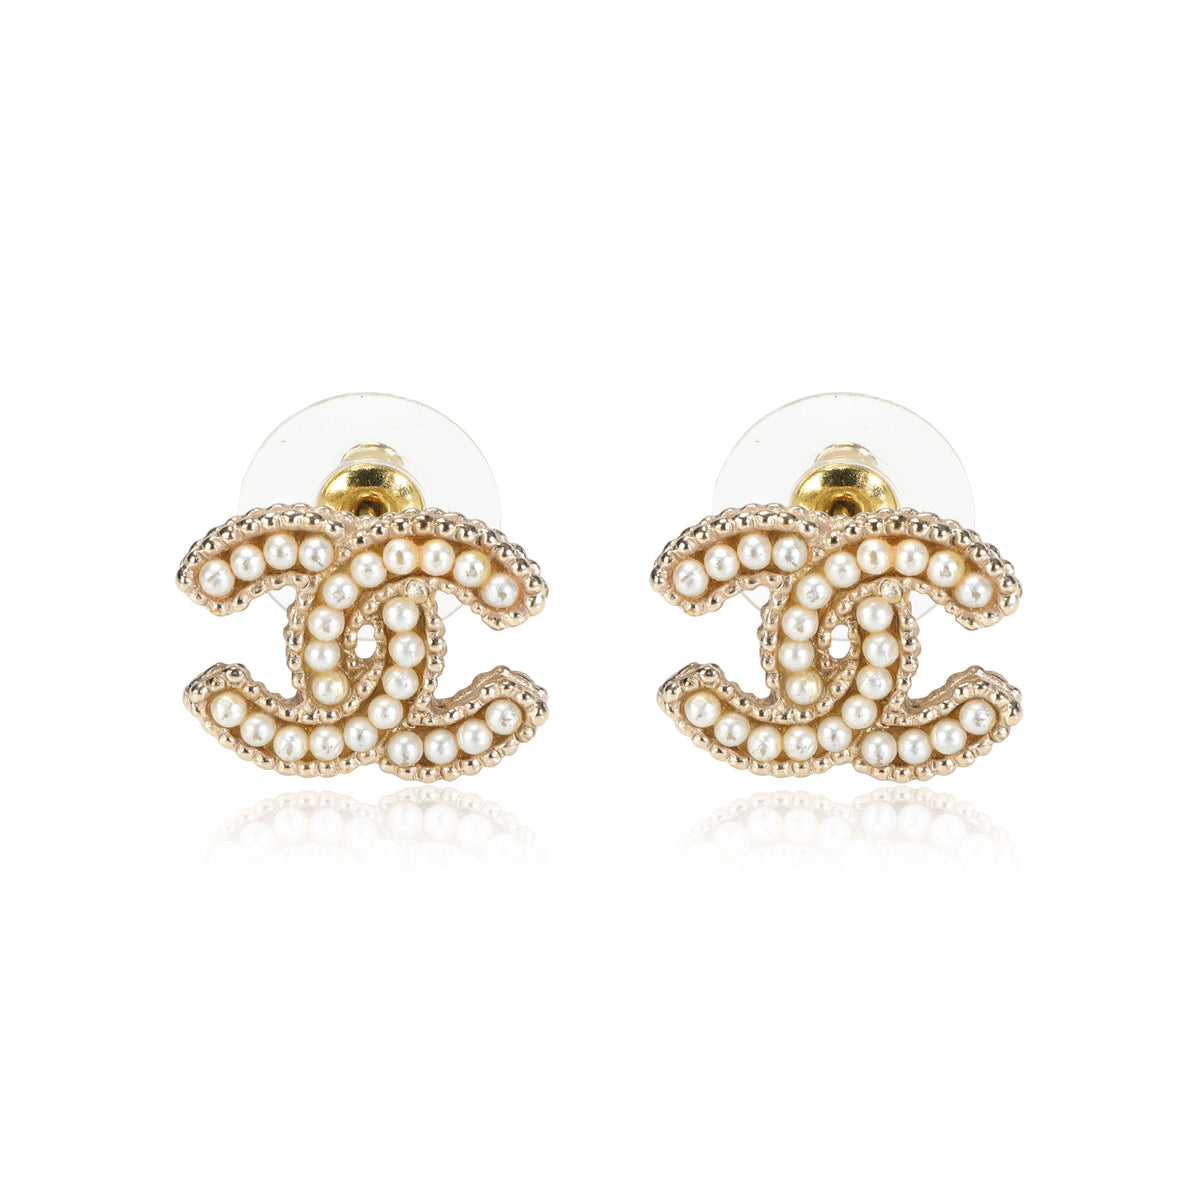 CHANEL Classic Mini CC Crystal Stud Gold Earrings Hallmark